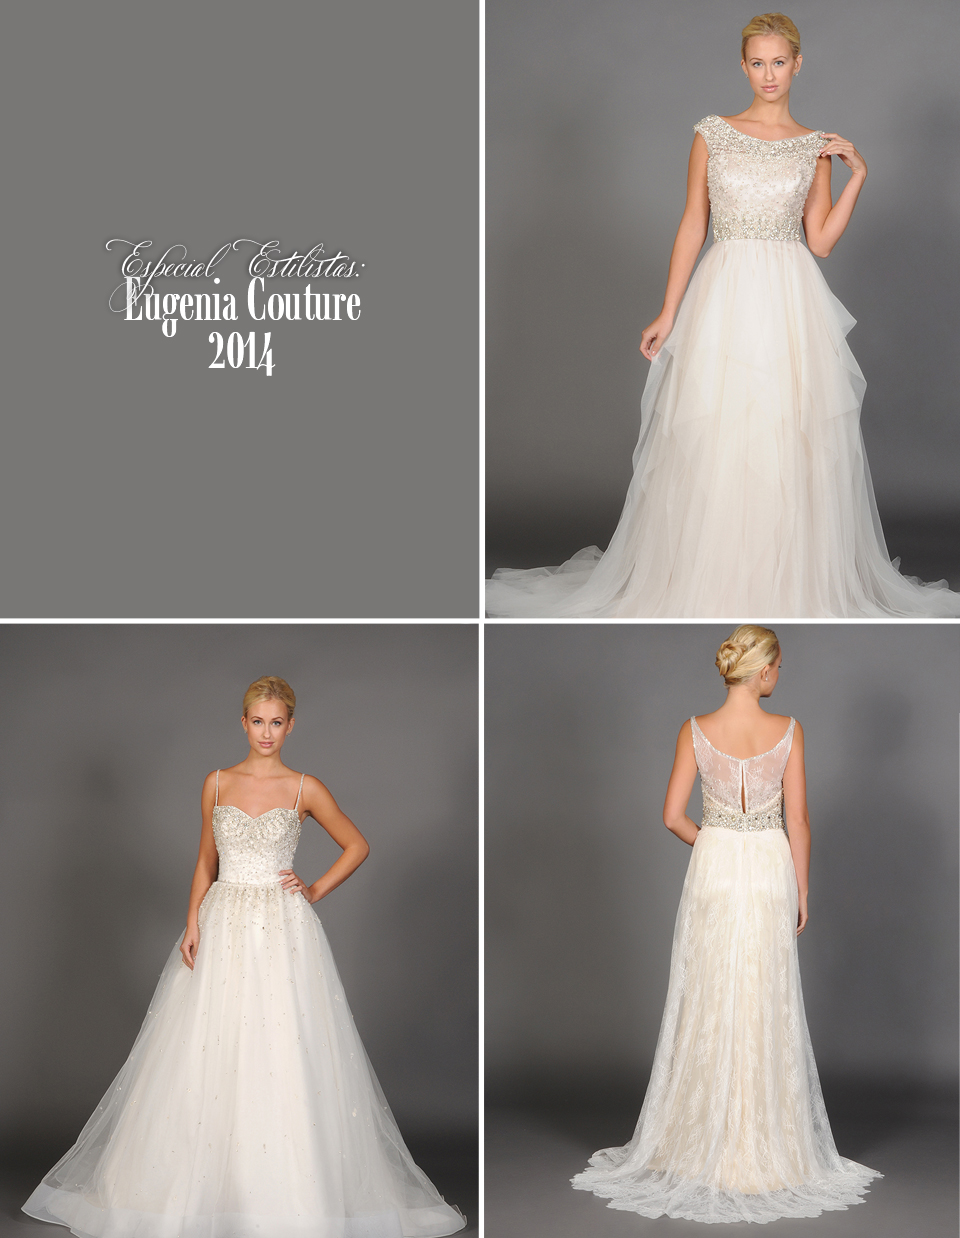 Os vestidos de noiva
Eugenia Couture 2014